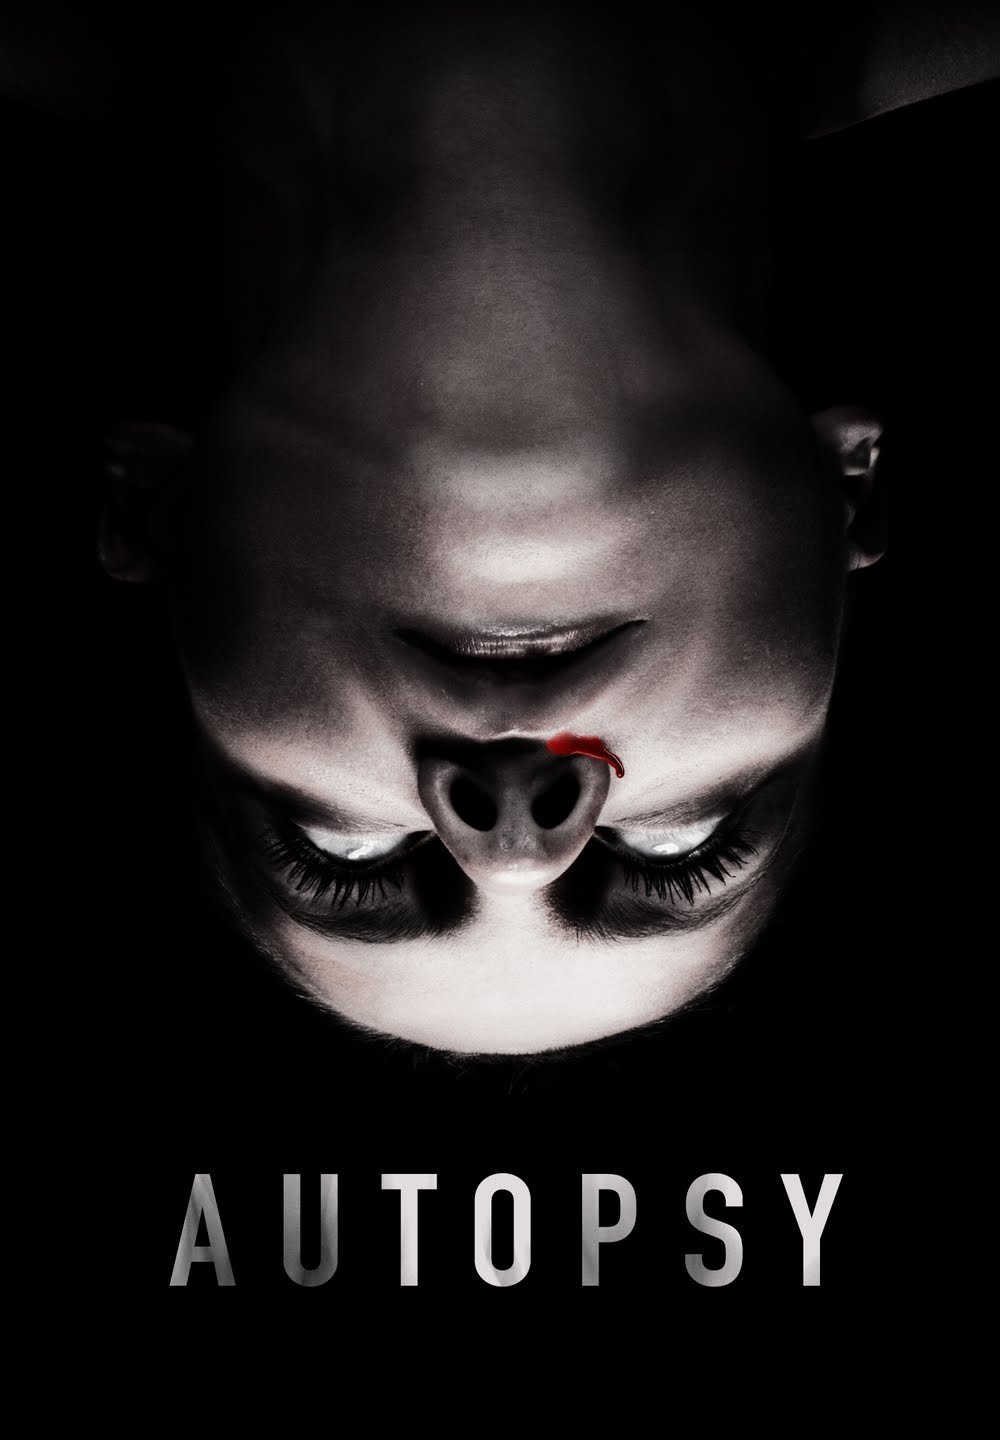 Autopsy [HD] (2017)